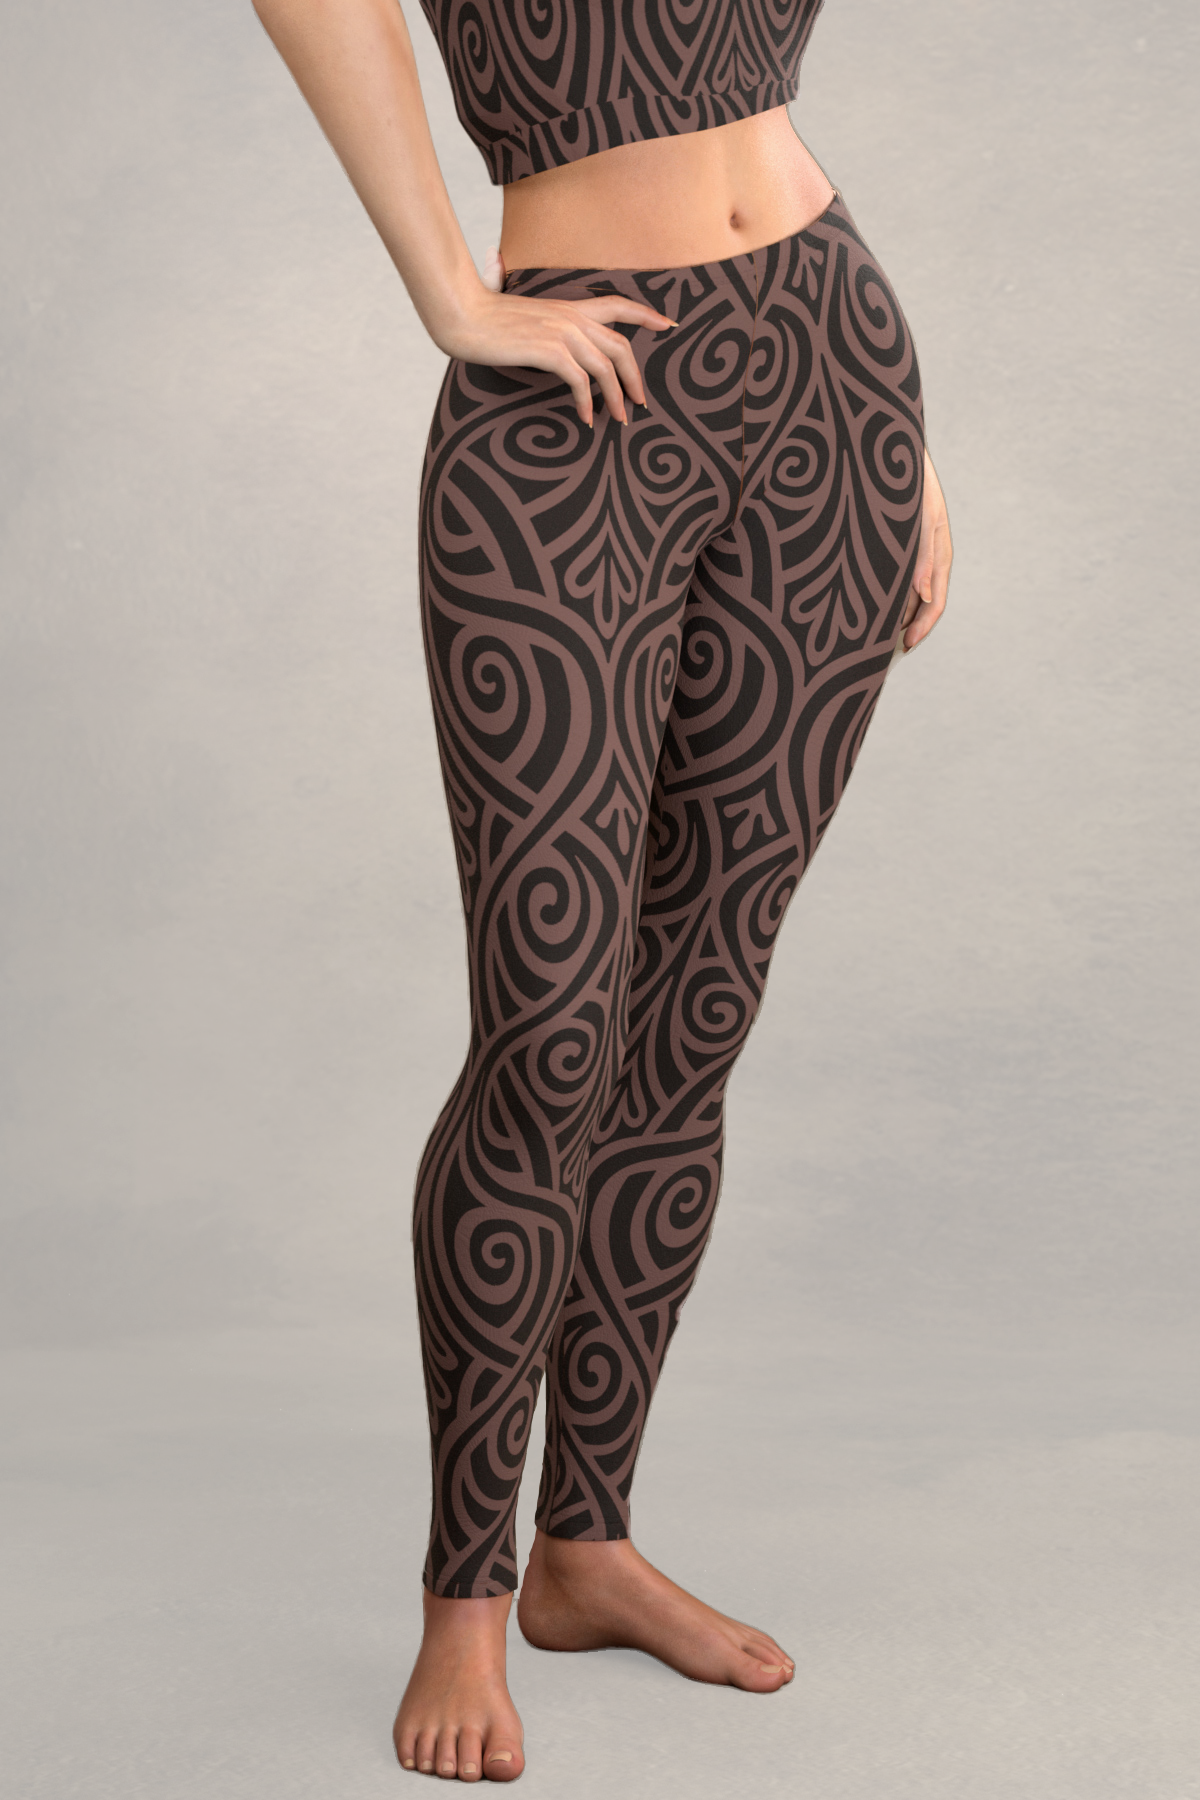 Black and brown floral printed leggings. Polyester spandex blend